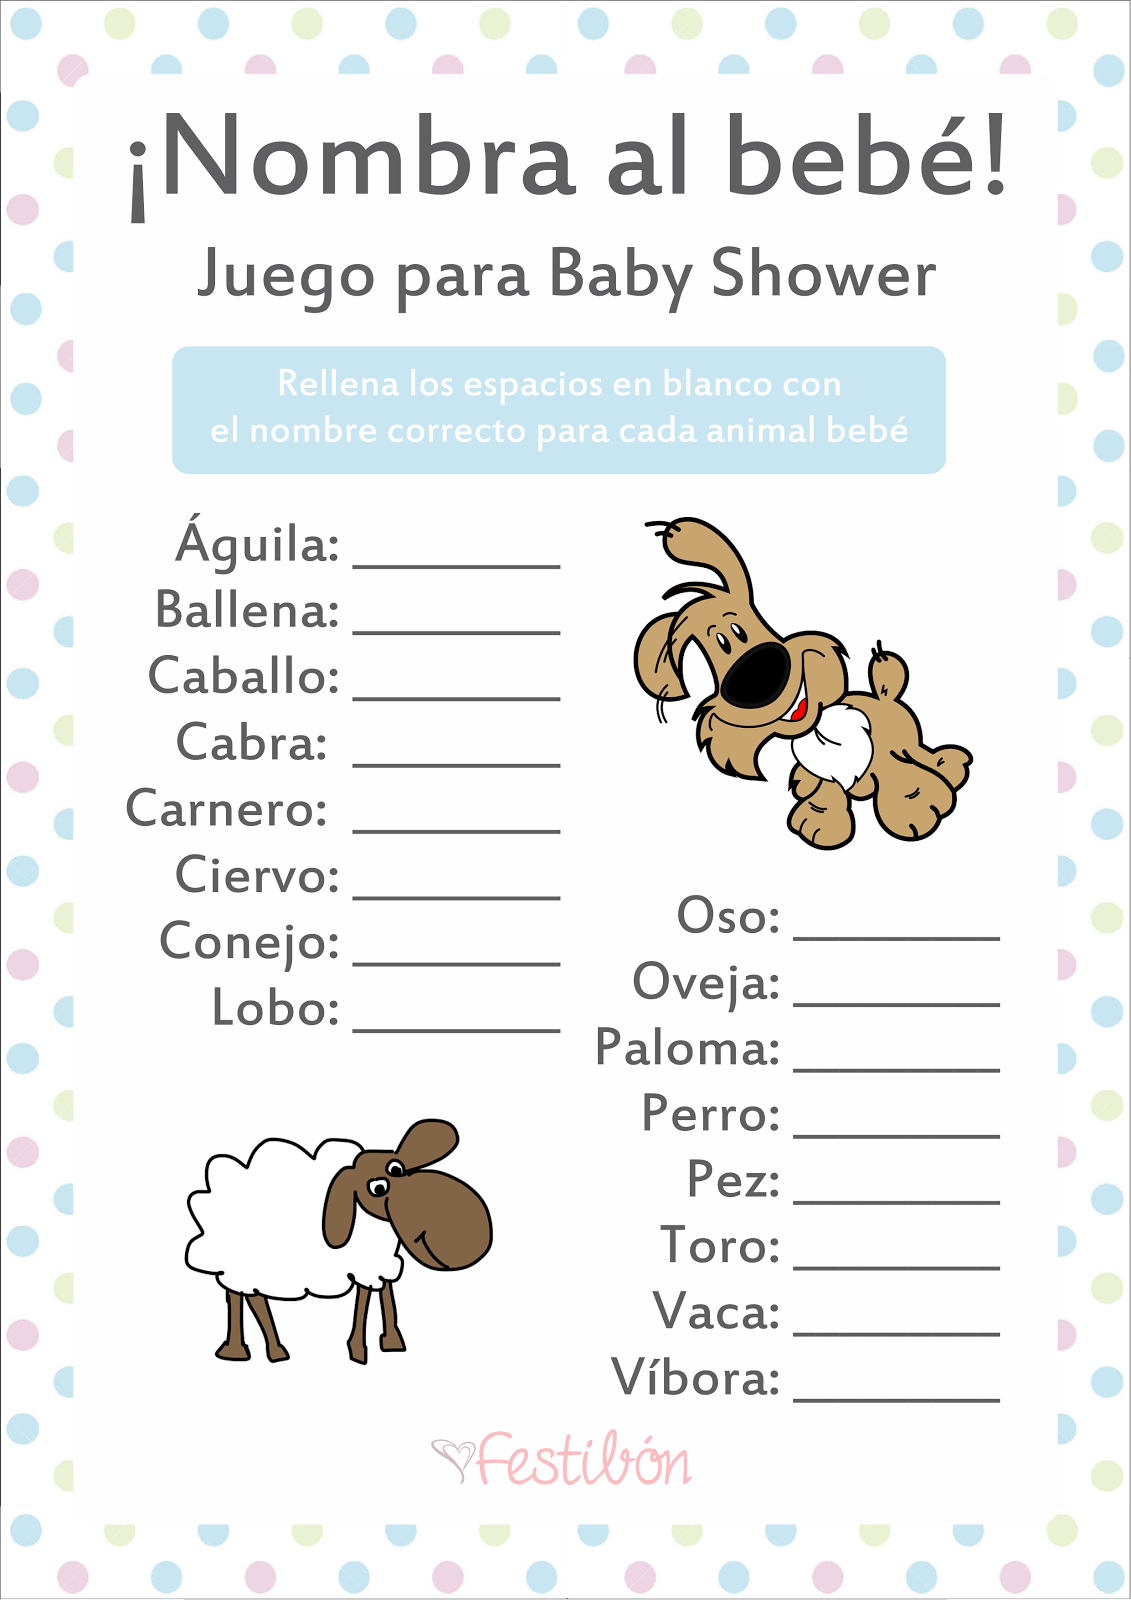 12 Juegos para Baby Shower Mixto Realmente Divertidos ...